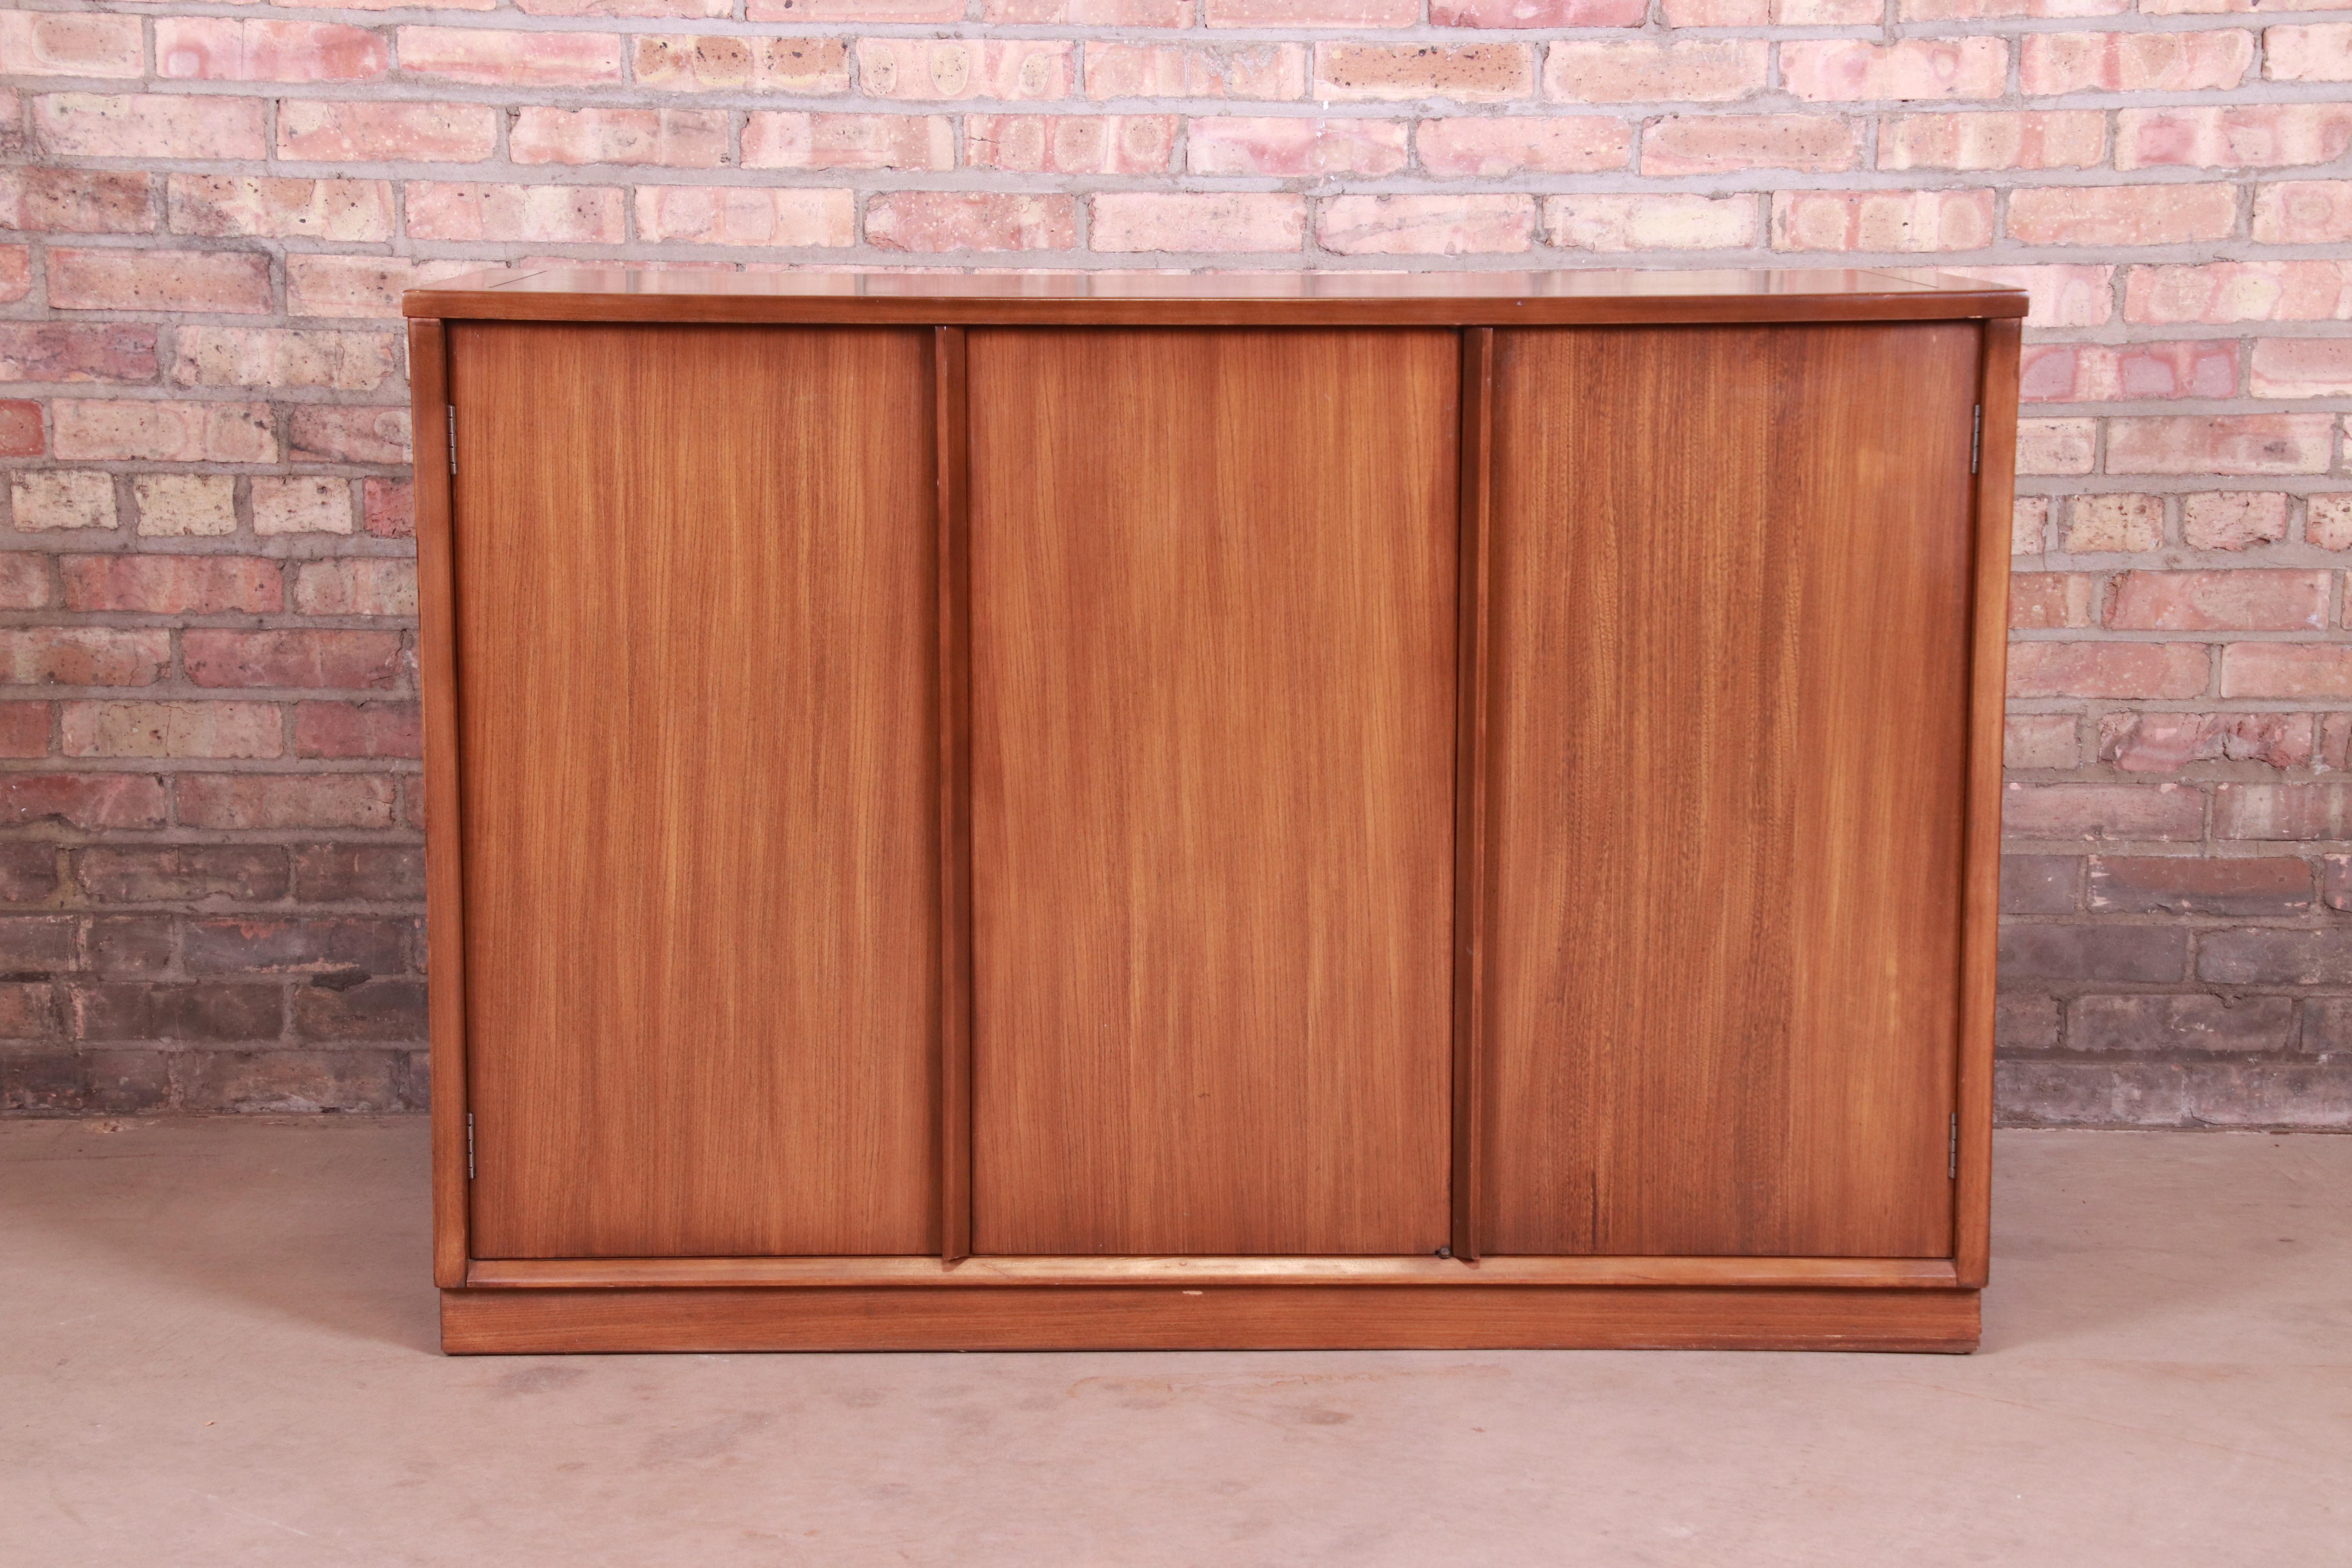 A sleek and stylish Mid-Century Modern elm wood sideboard server, credenza, or bar cabinet

By Edward Wormley for Drexel 